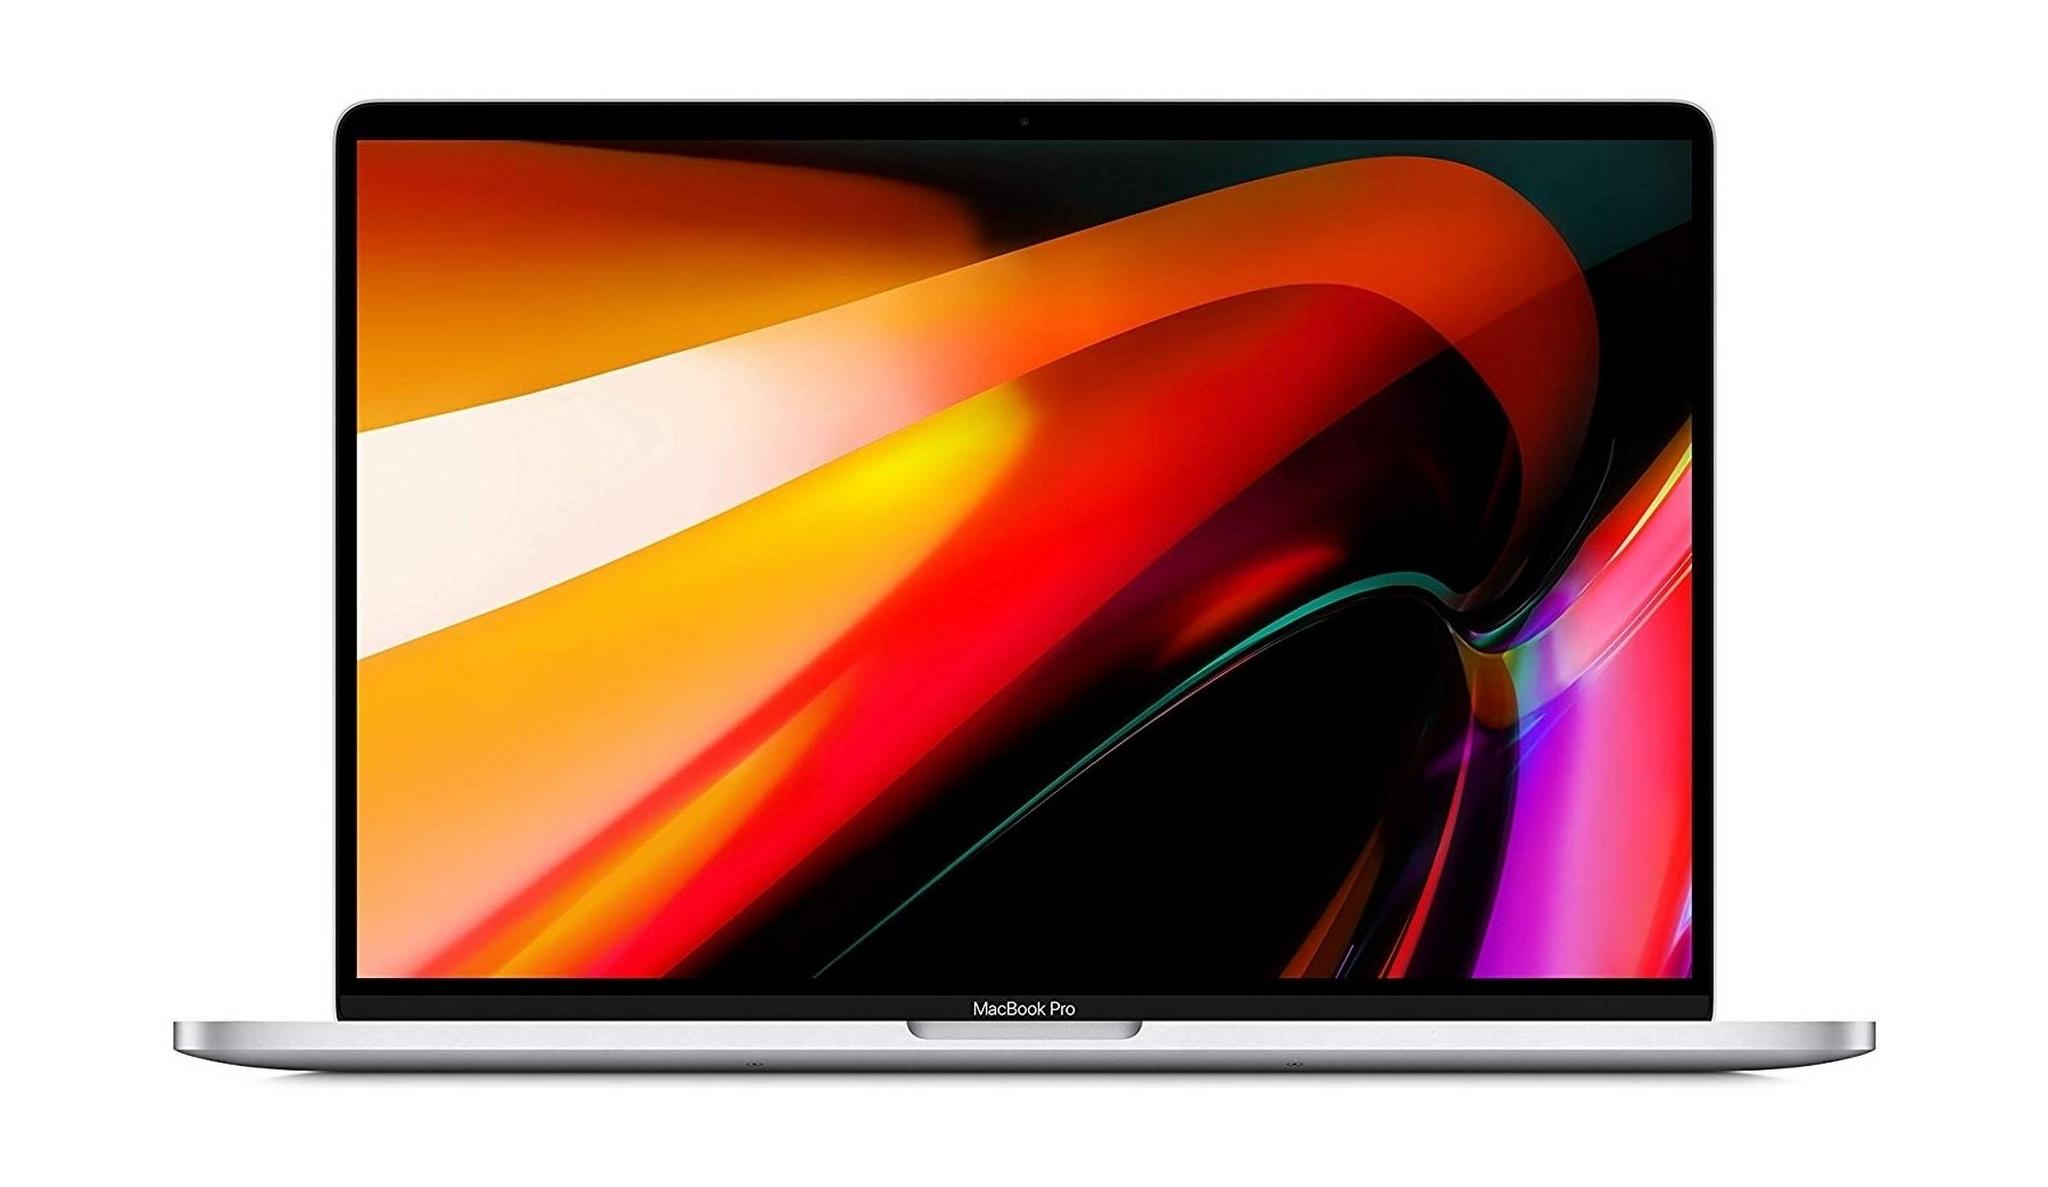 Macbook Pro 16 Core I9 16GB RAM 1TB SSD 16"(2019) 9th Generation (MVVM2AB/A)- Silver